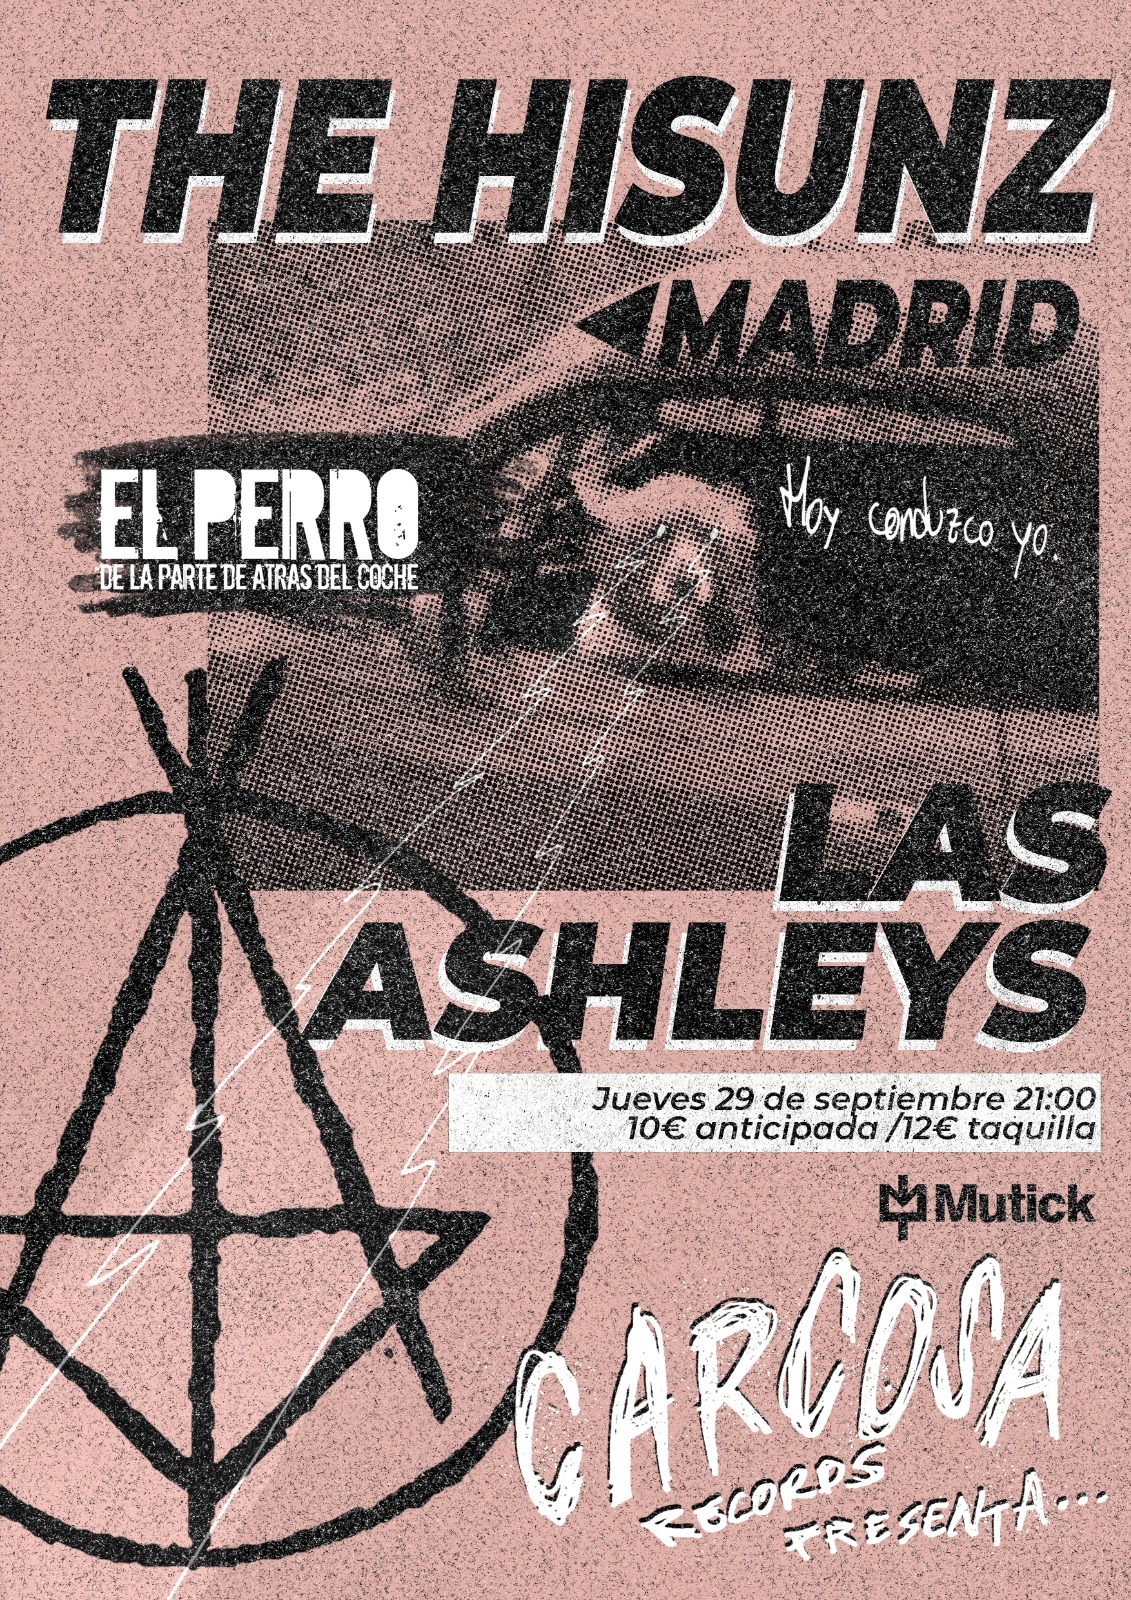 CARCOSA RECORDS presenta The Hisunz + Las Ashleys en Madrid - Mutick